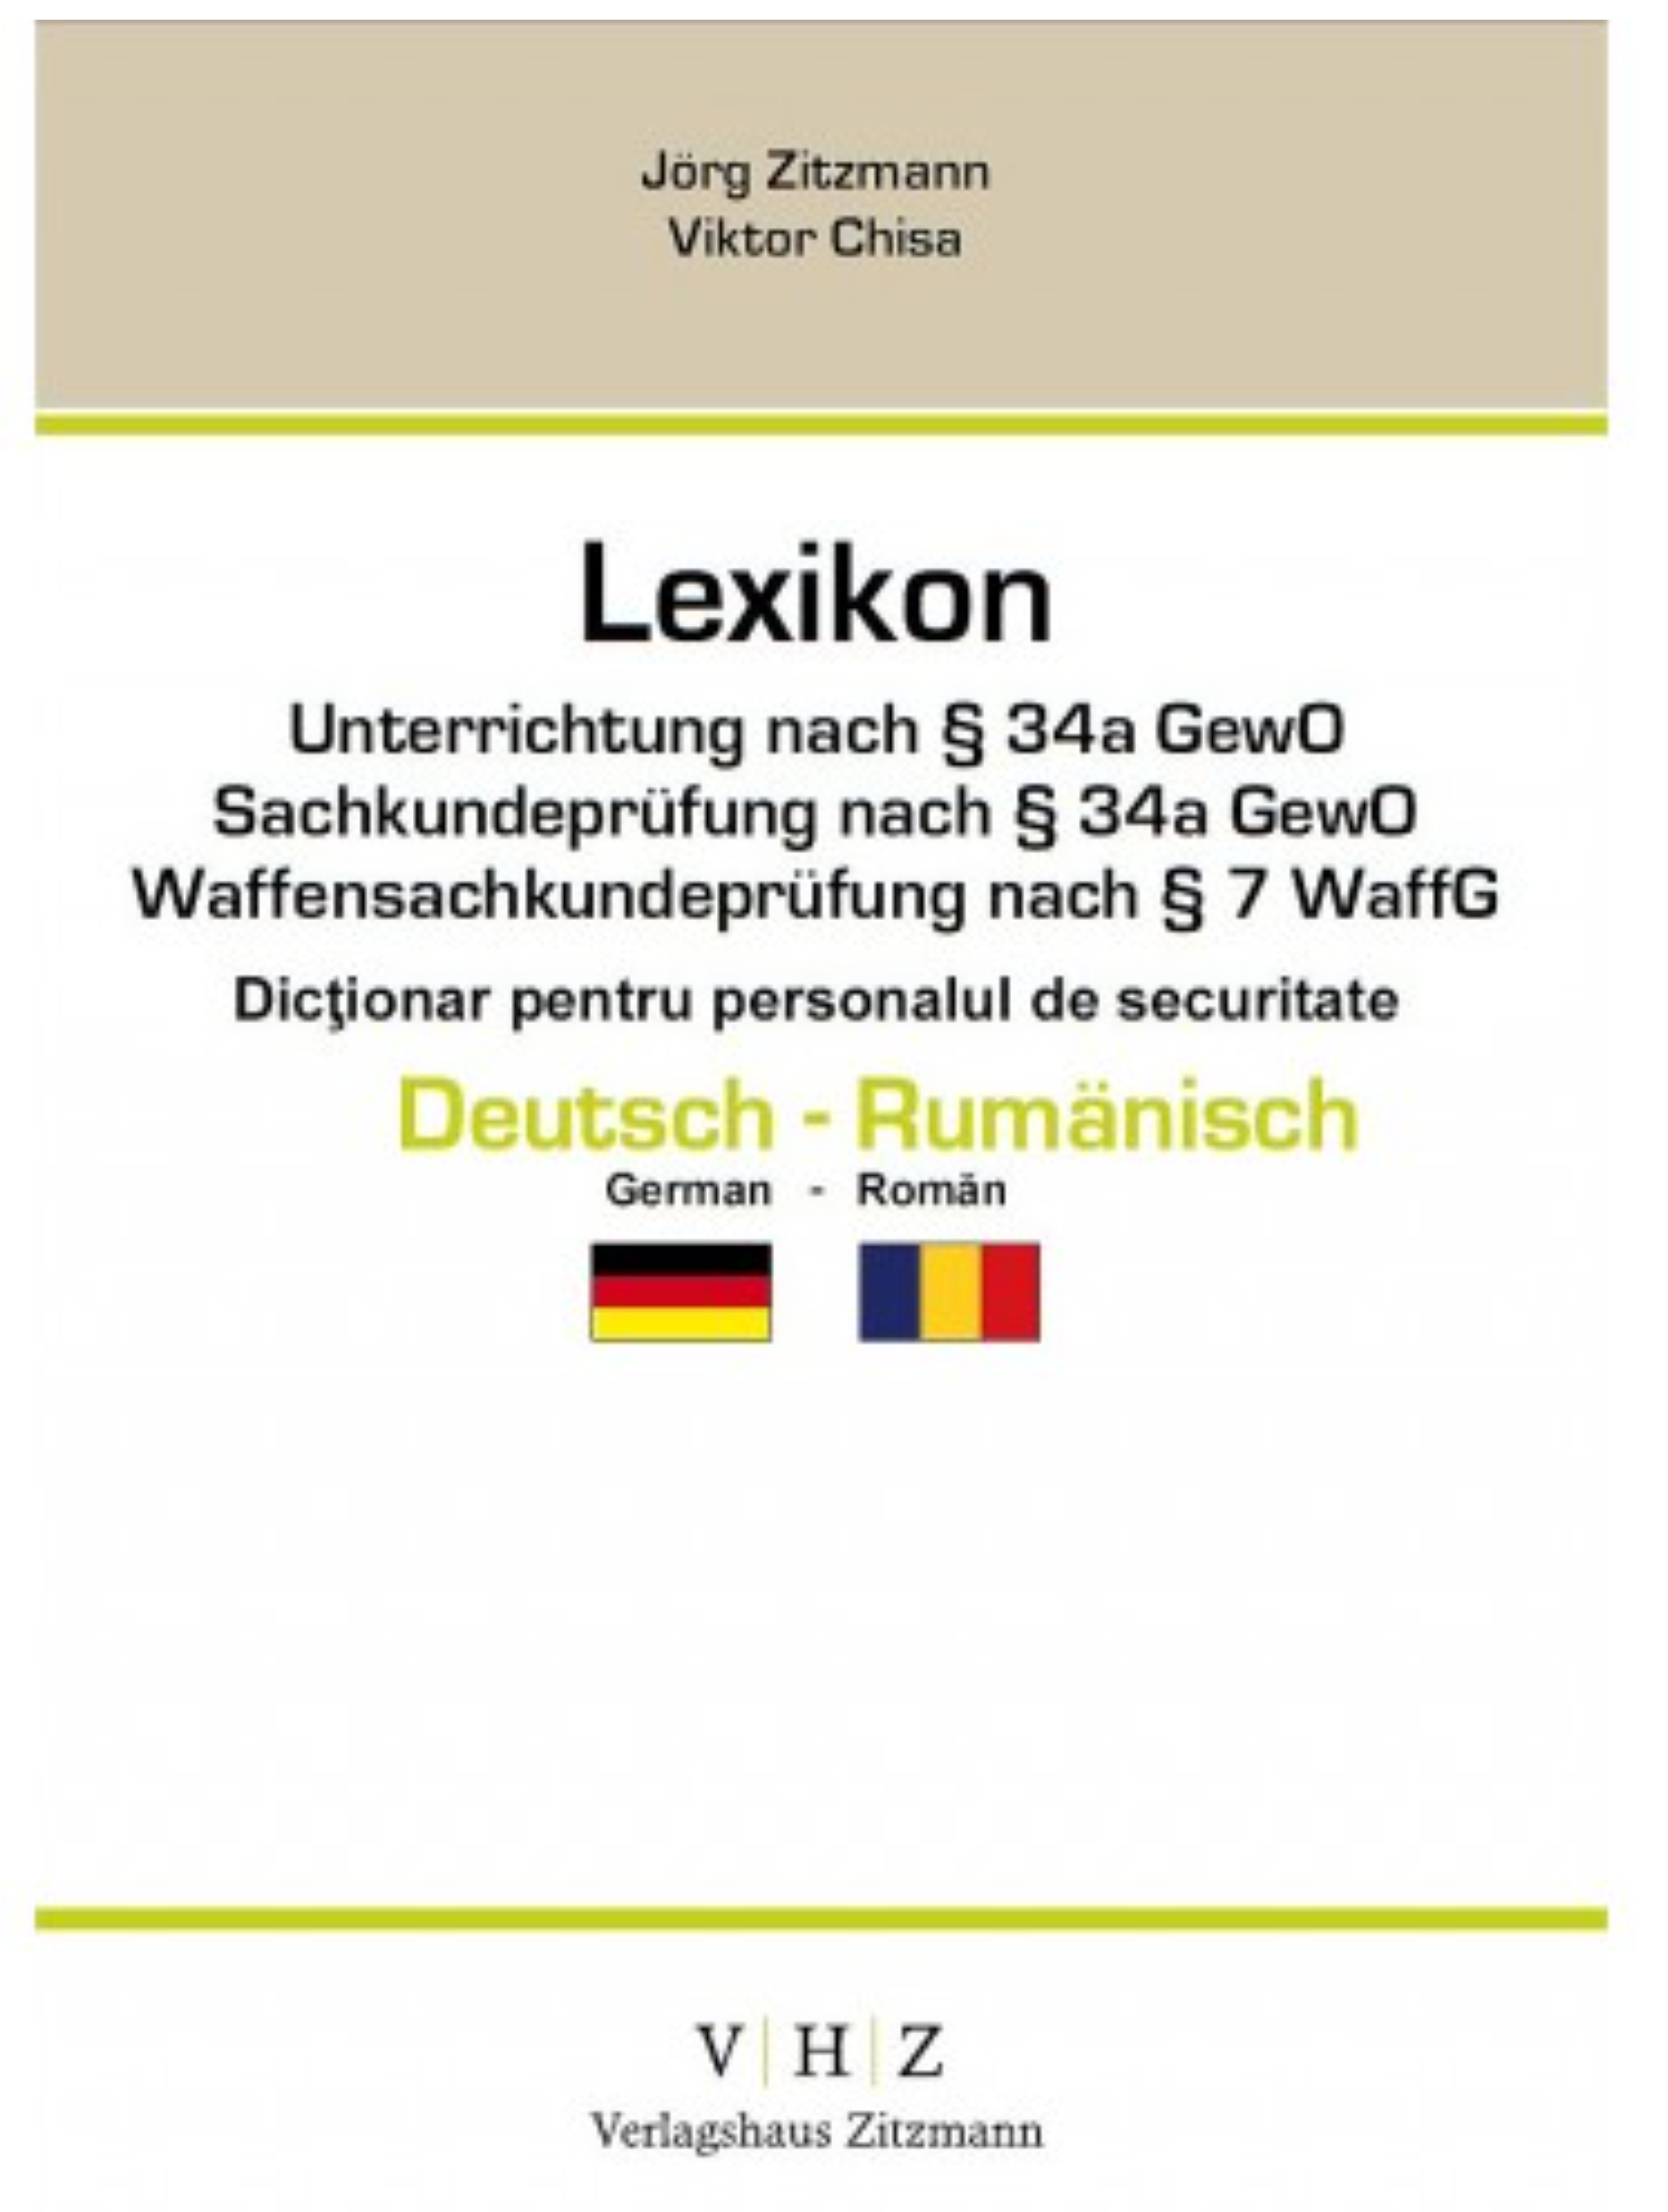 Unterrichtung / Sachkundeprüfung § 34a GewO Lexikon Deutsch - Rumänisch